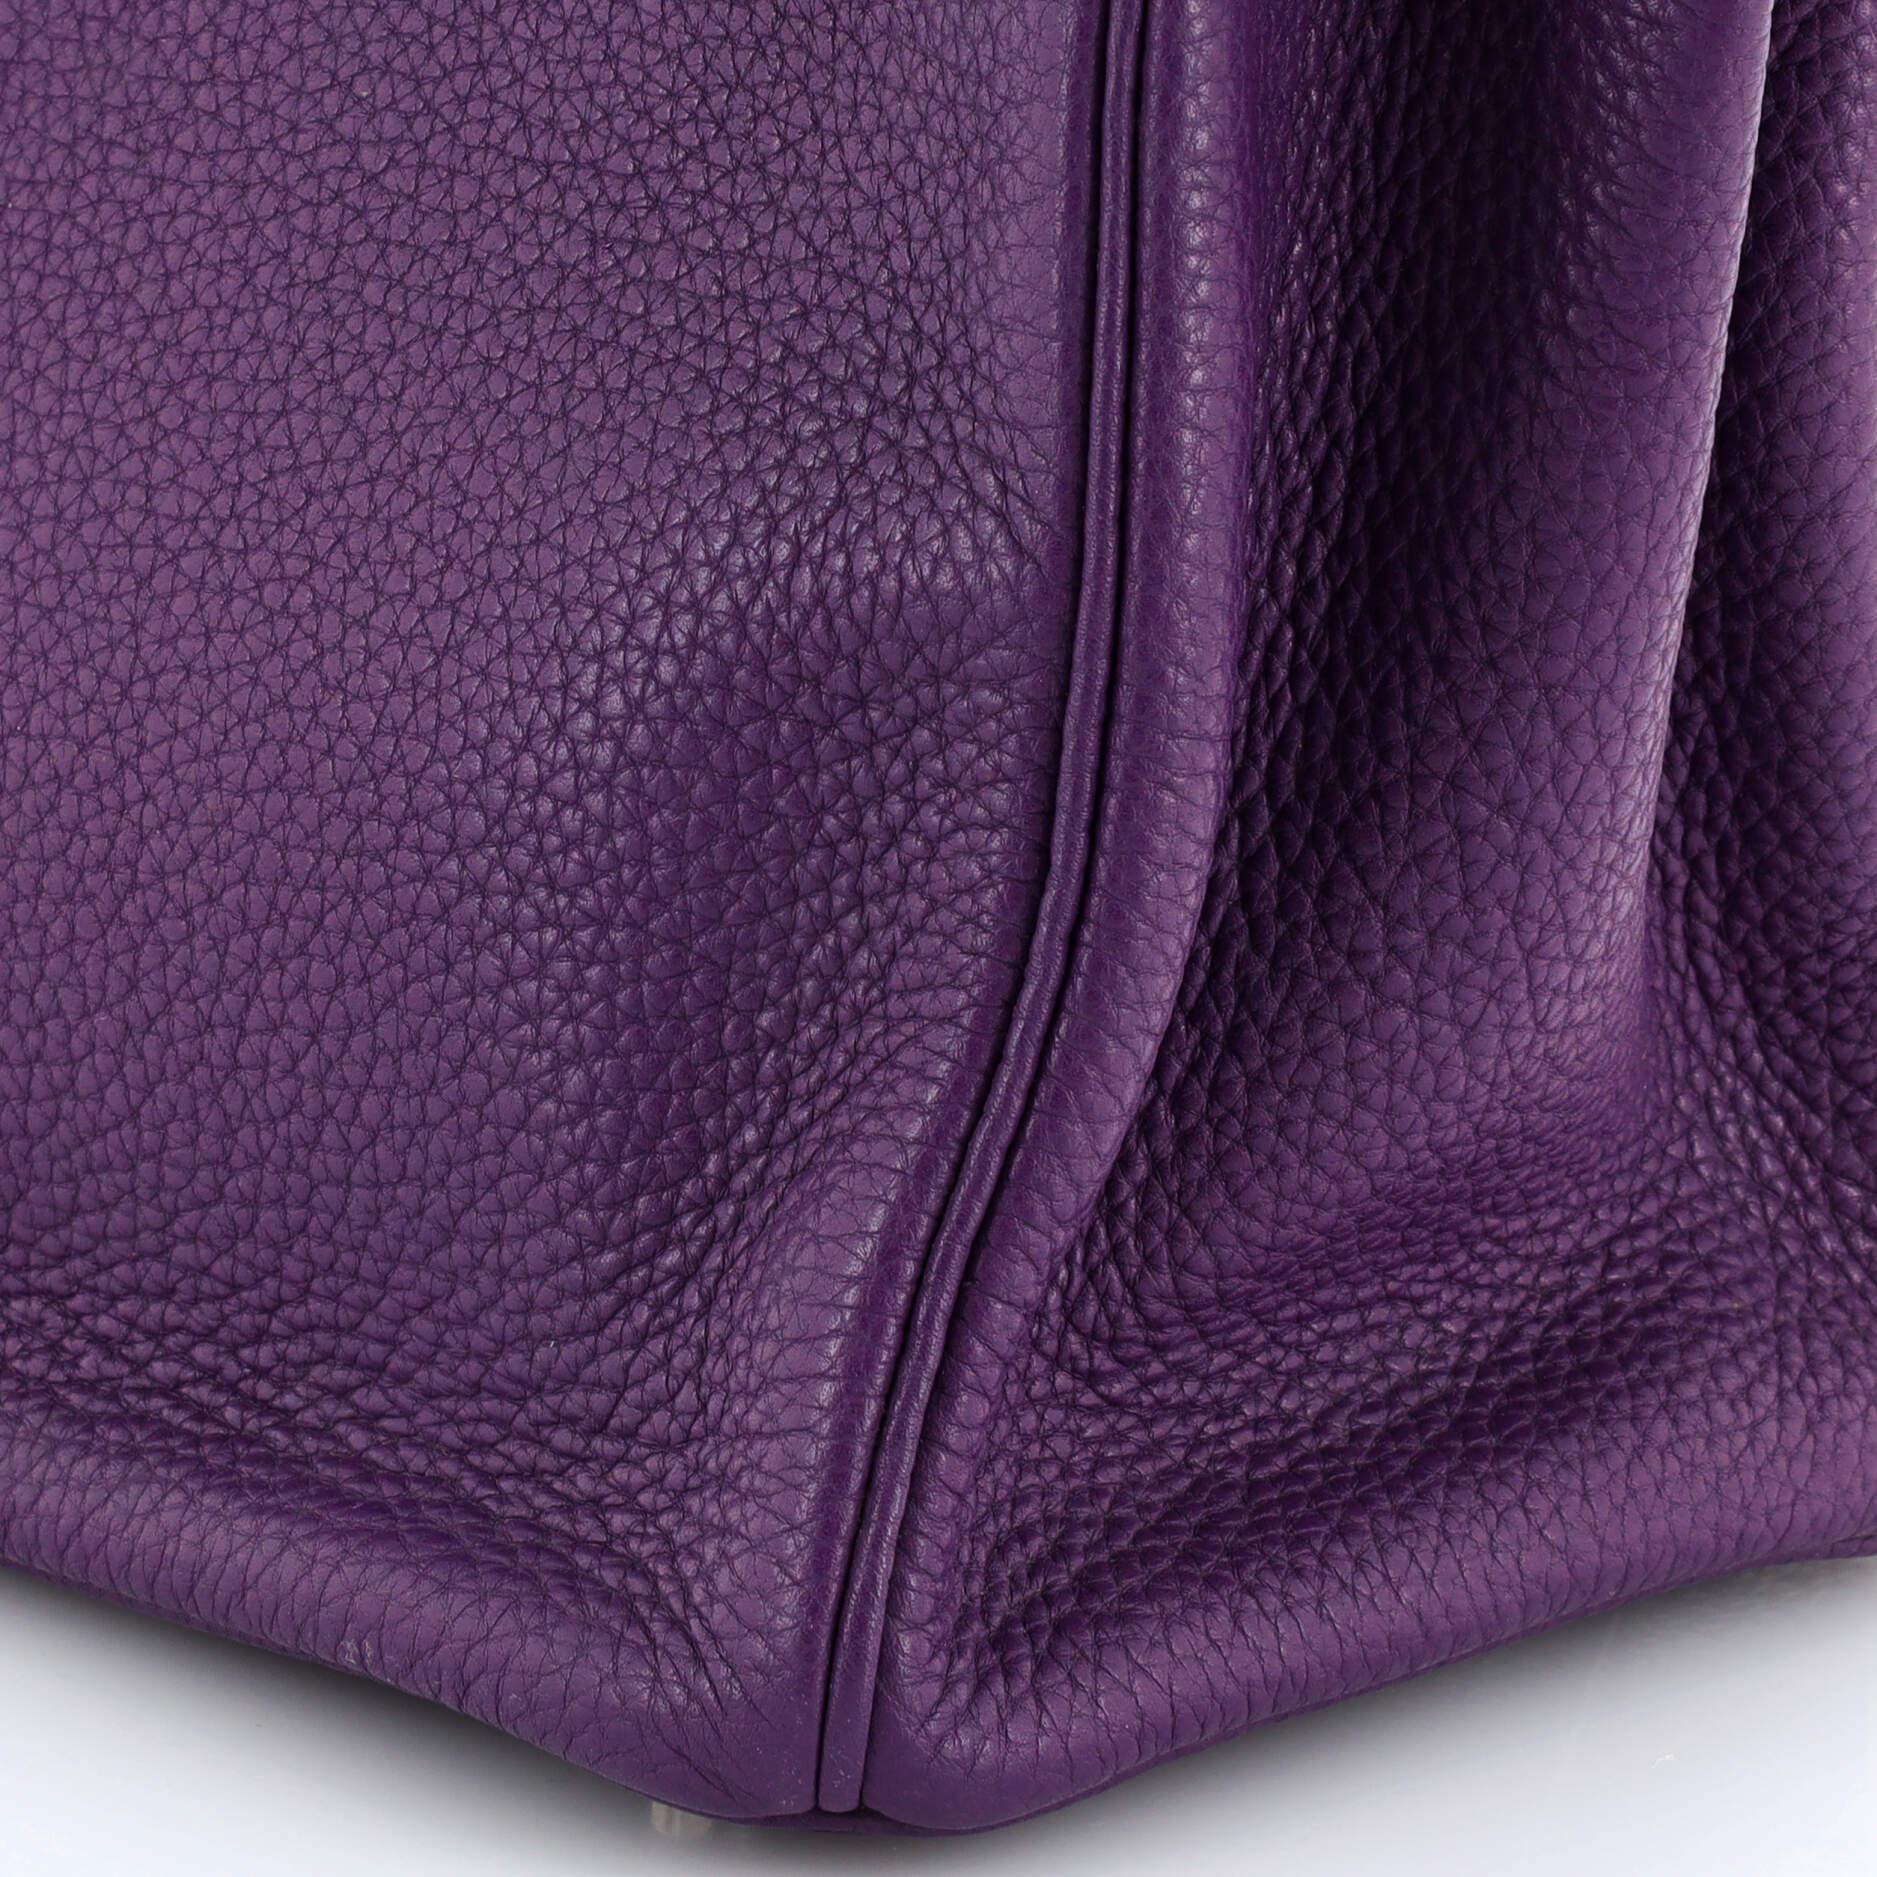 Hermes Birkin Handbag Ultraviolet Togo with Palladium Hardware 30 For Sale 3